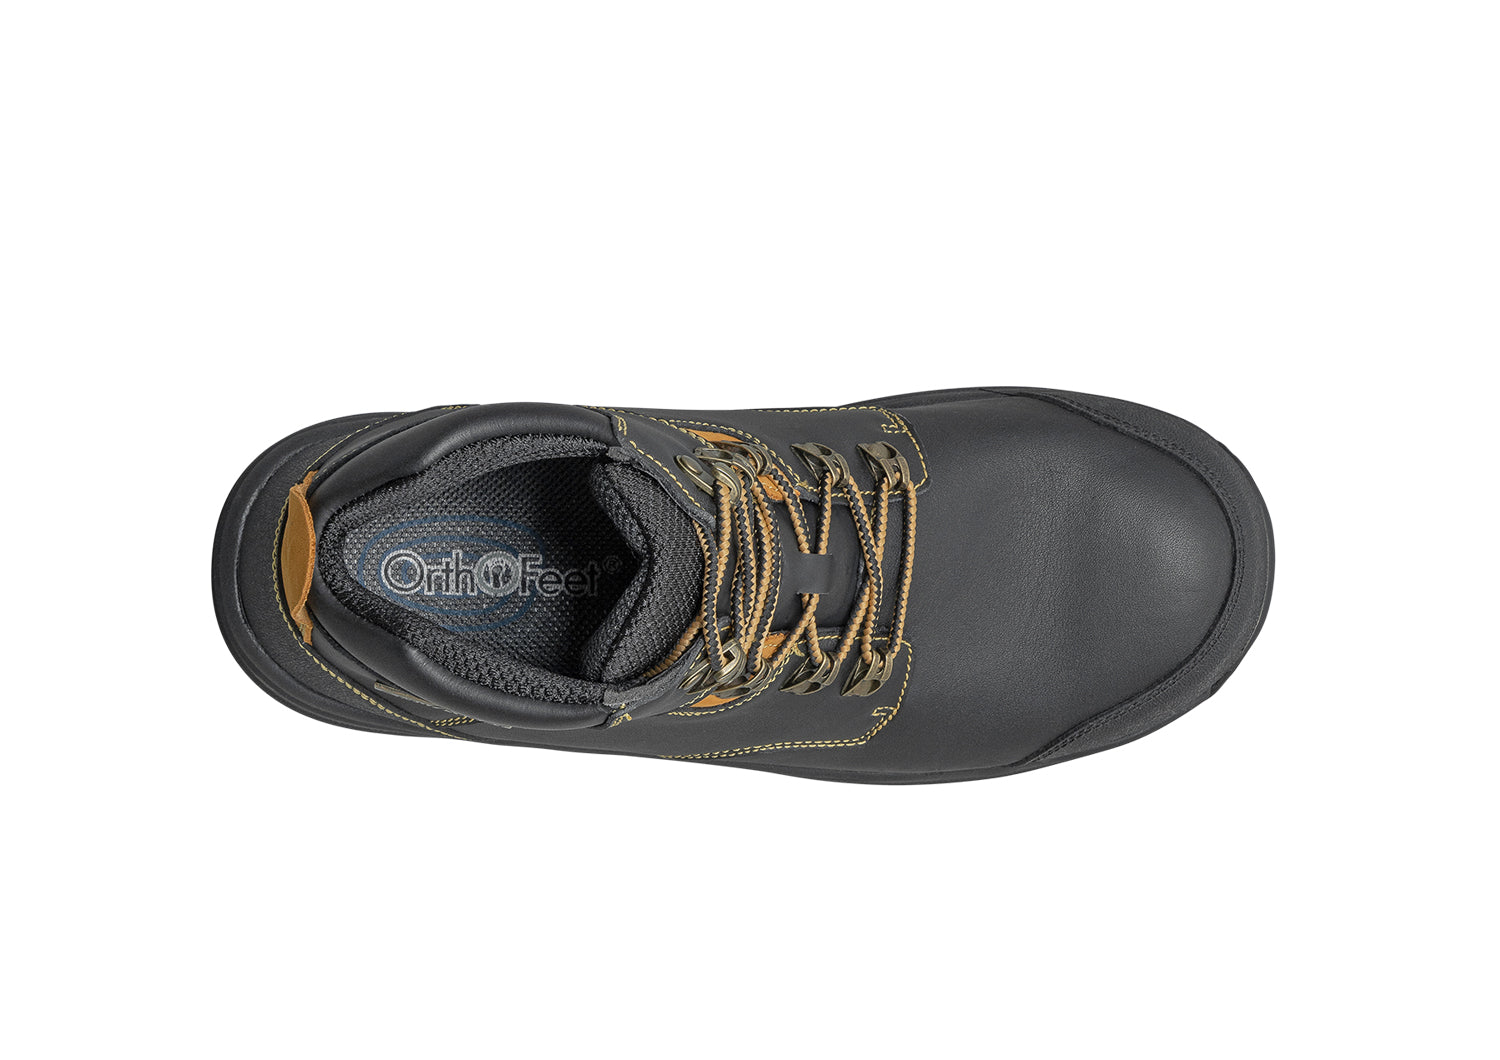 Men's Work Shoes Safety Composite Toe | Granite Black Orthofeet